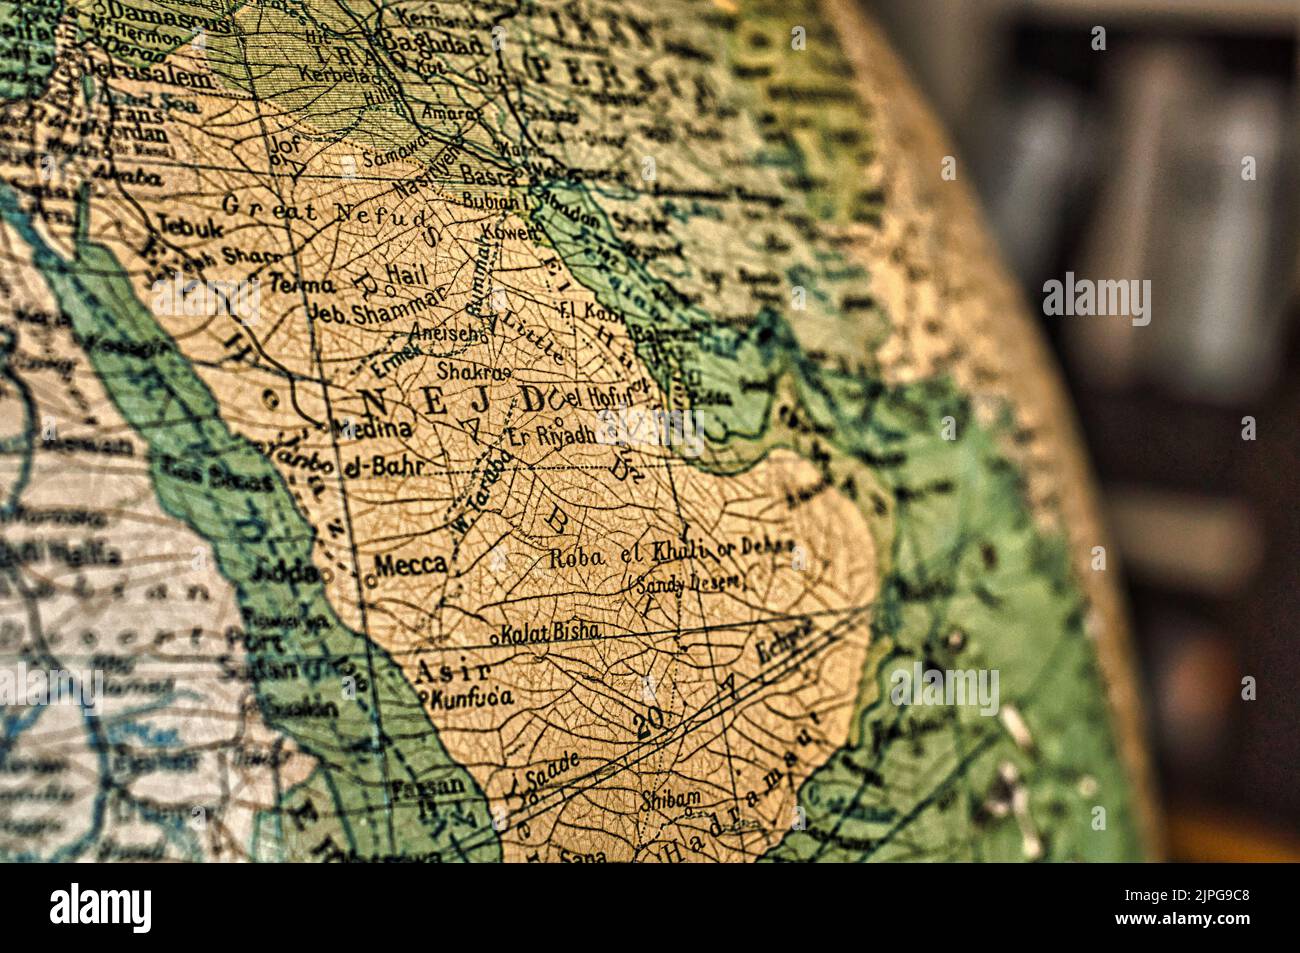 A map of Saudi Arabia / Nejd captured on an antique globe Stock Photo